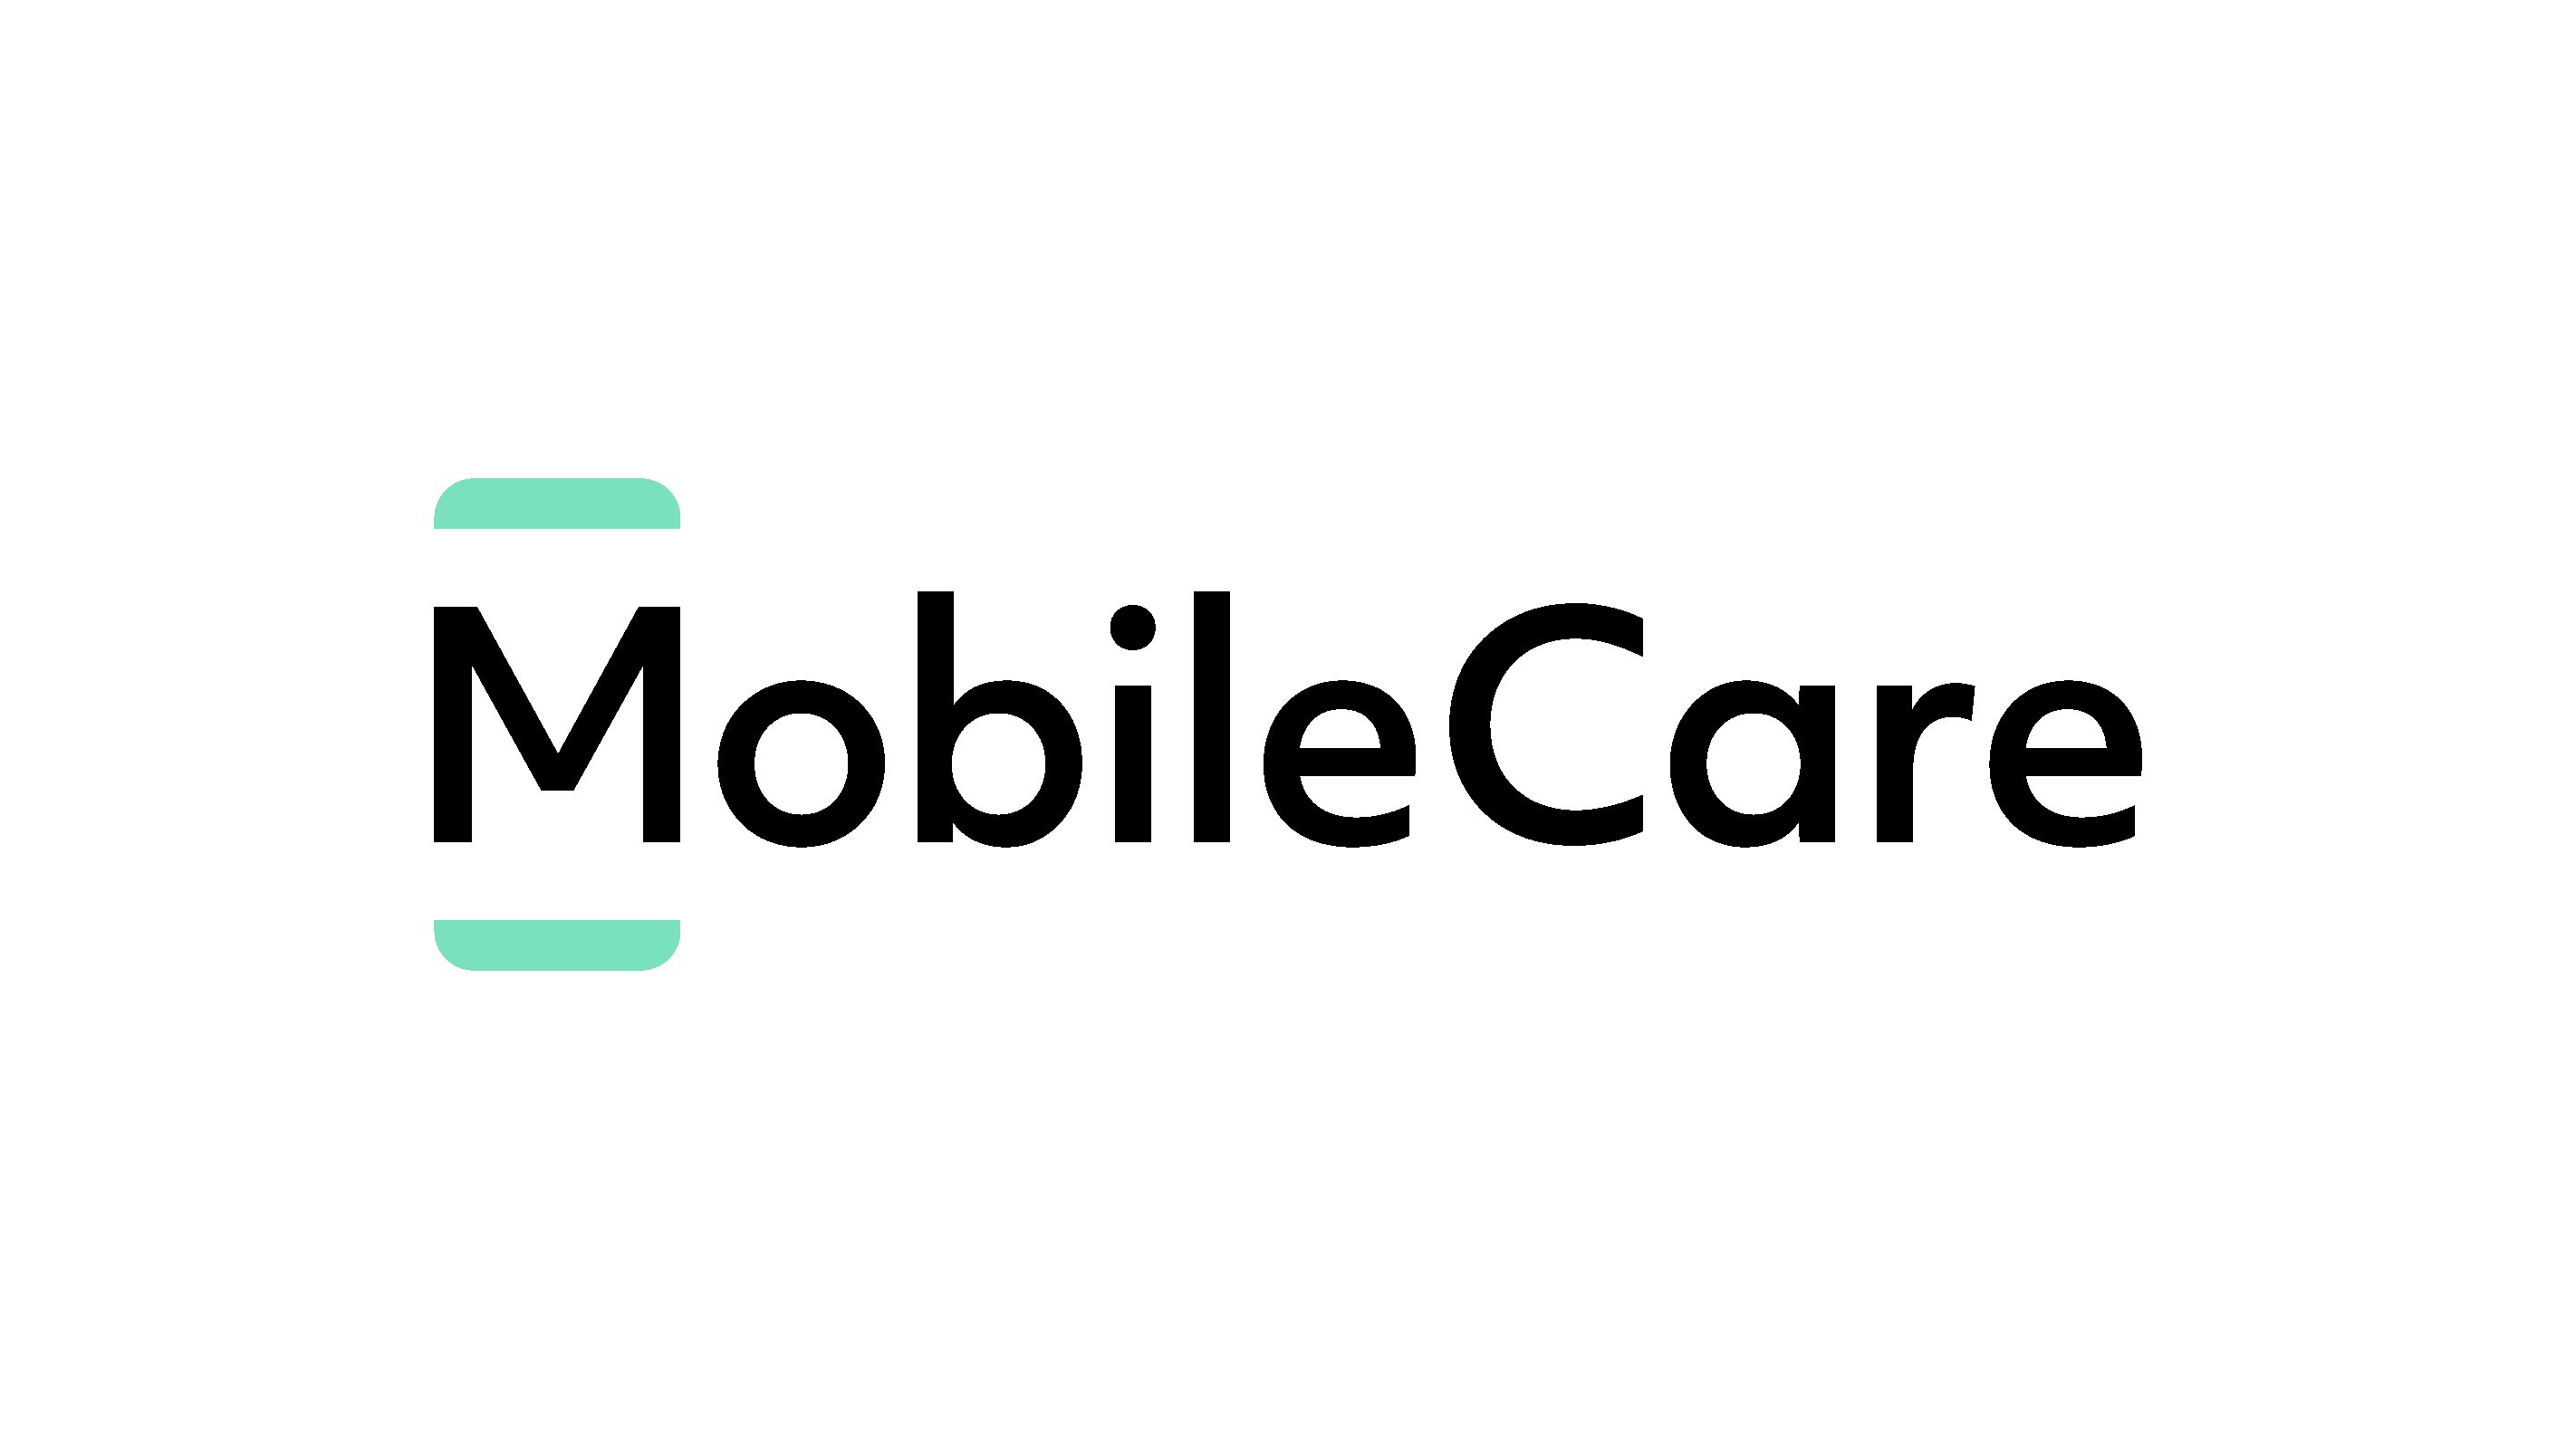 Mobile Care (Kiosk) logo